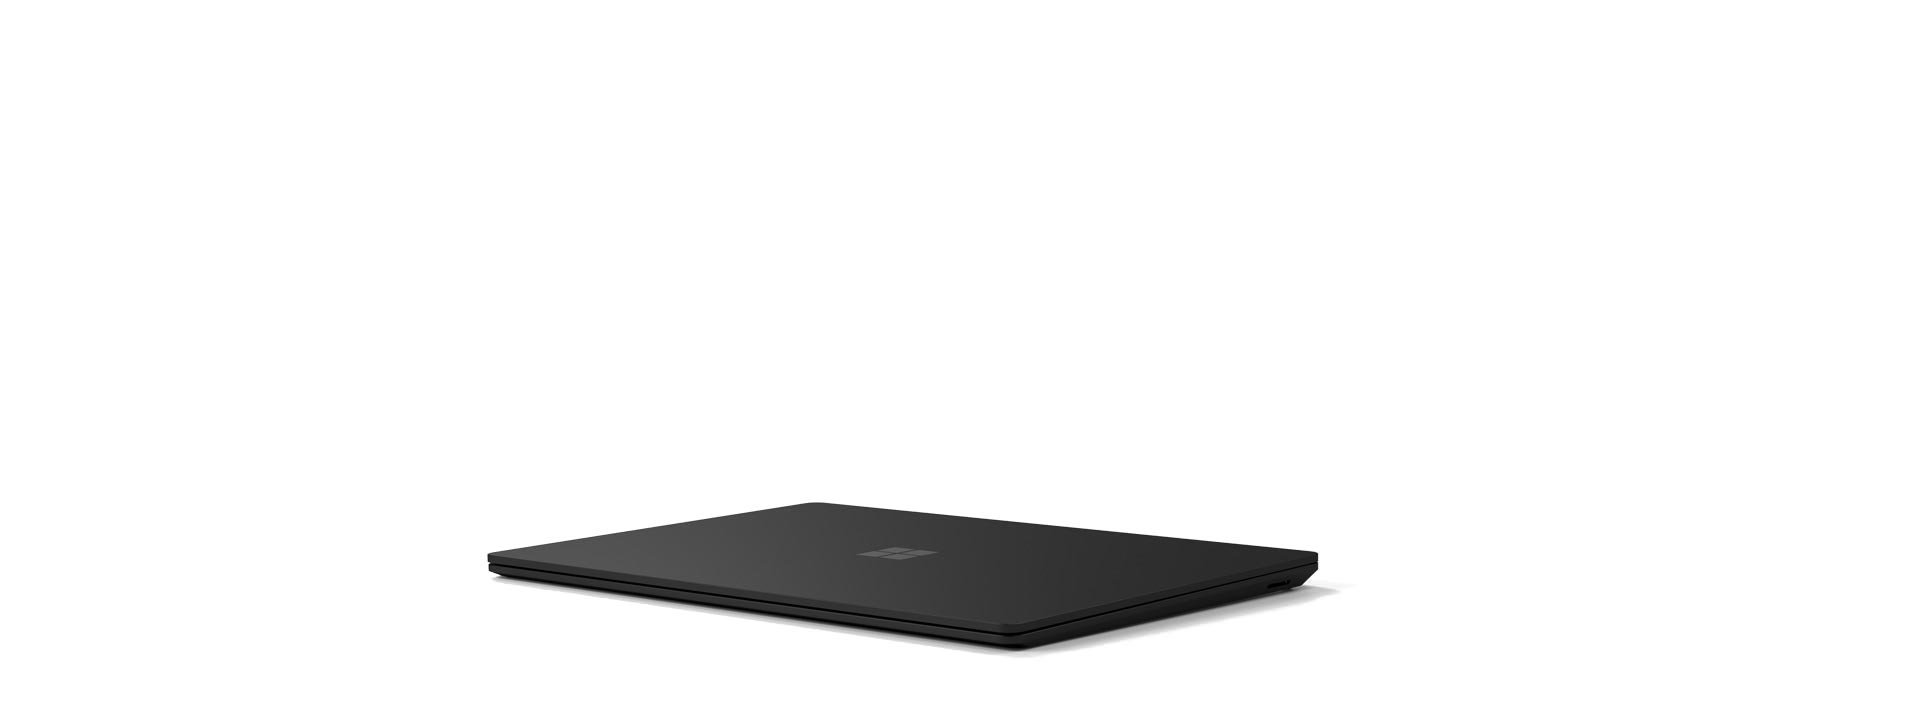 Surface Laptop 4 の回転ビュー